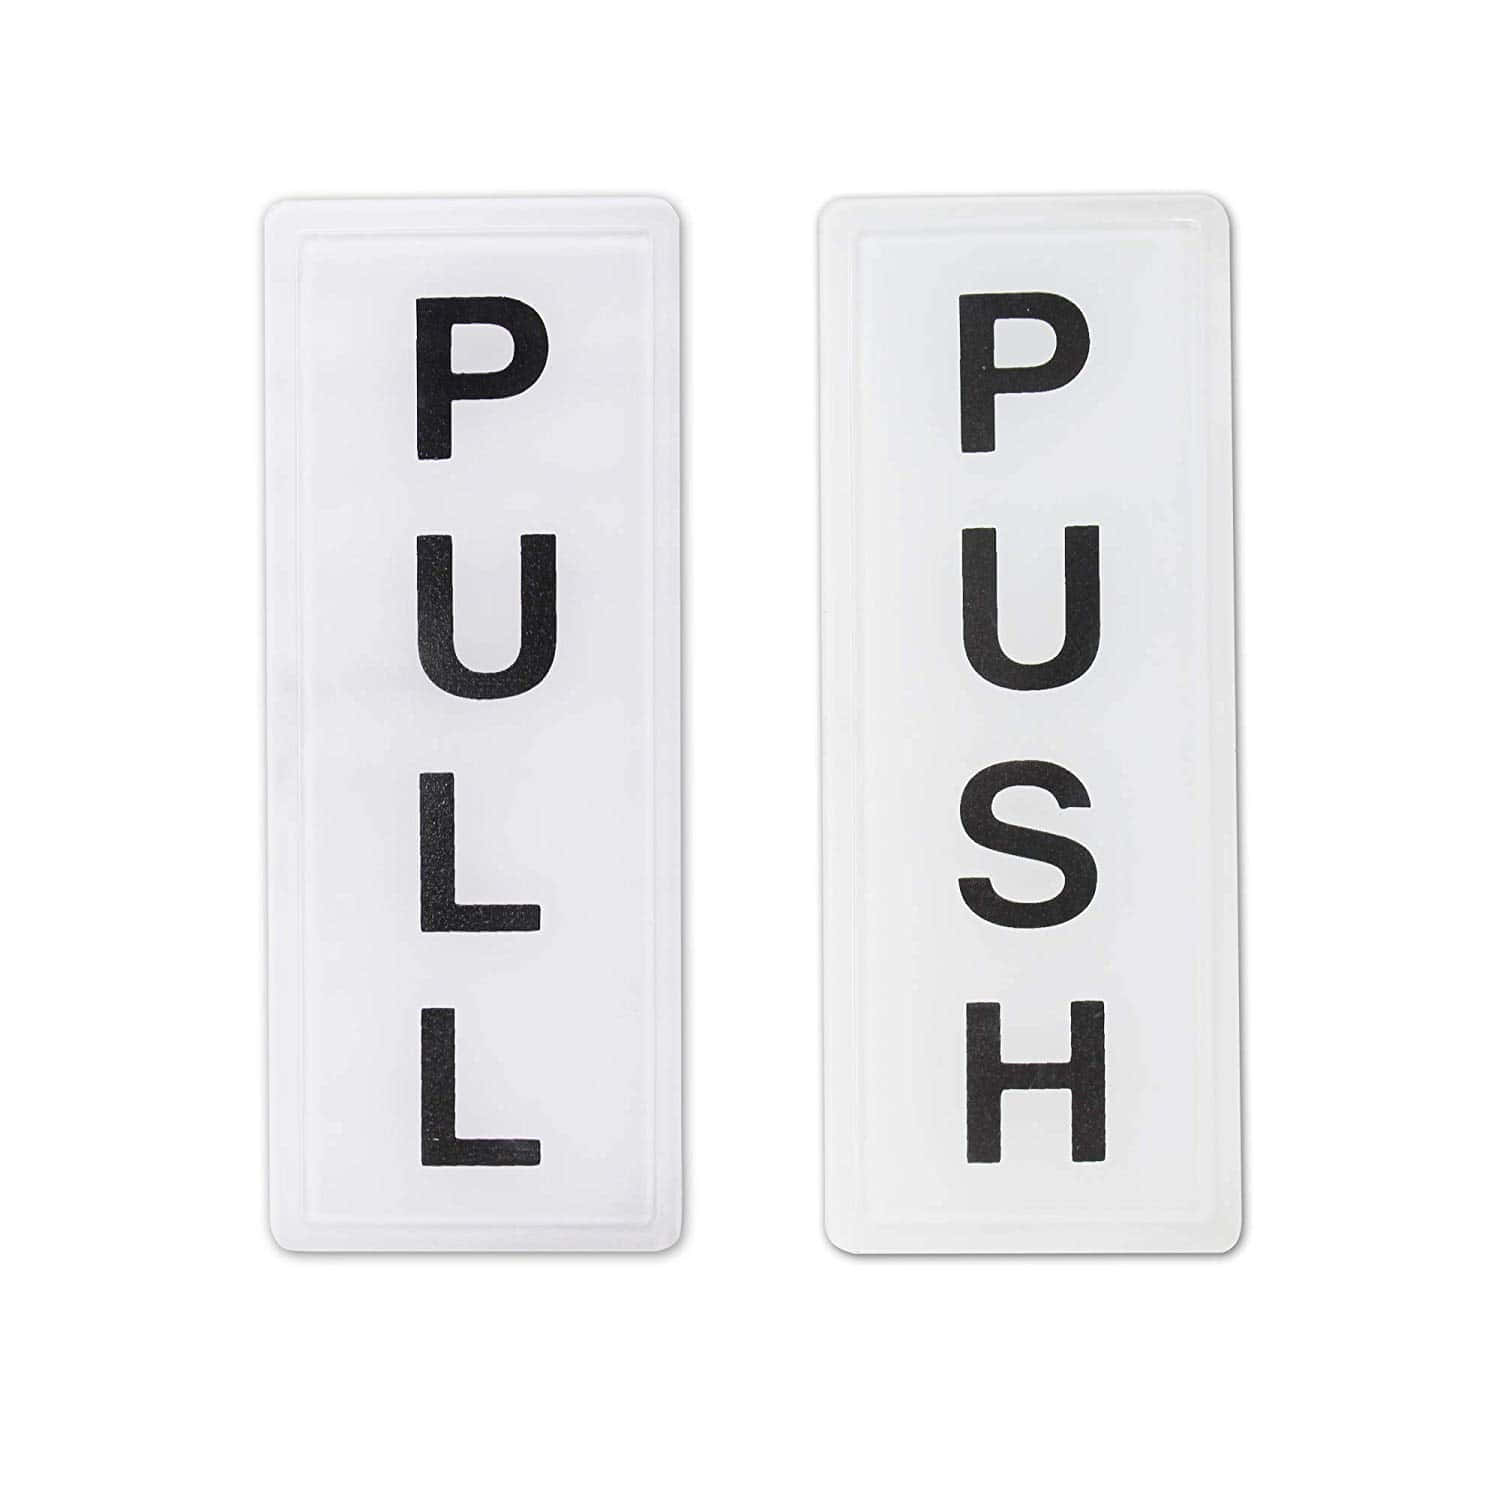 Legible Push Pull Signs Wallpaper